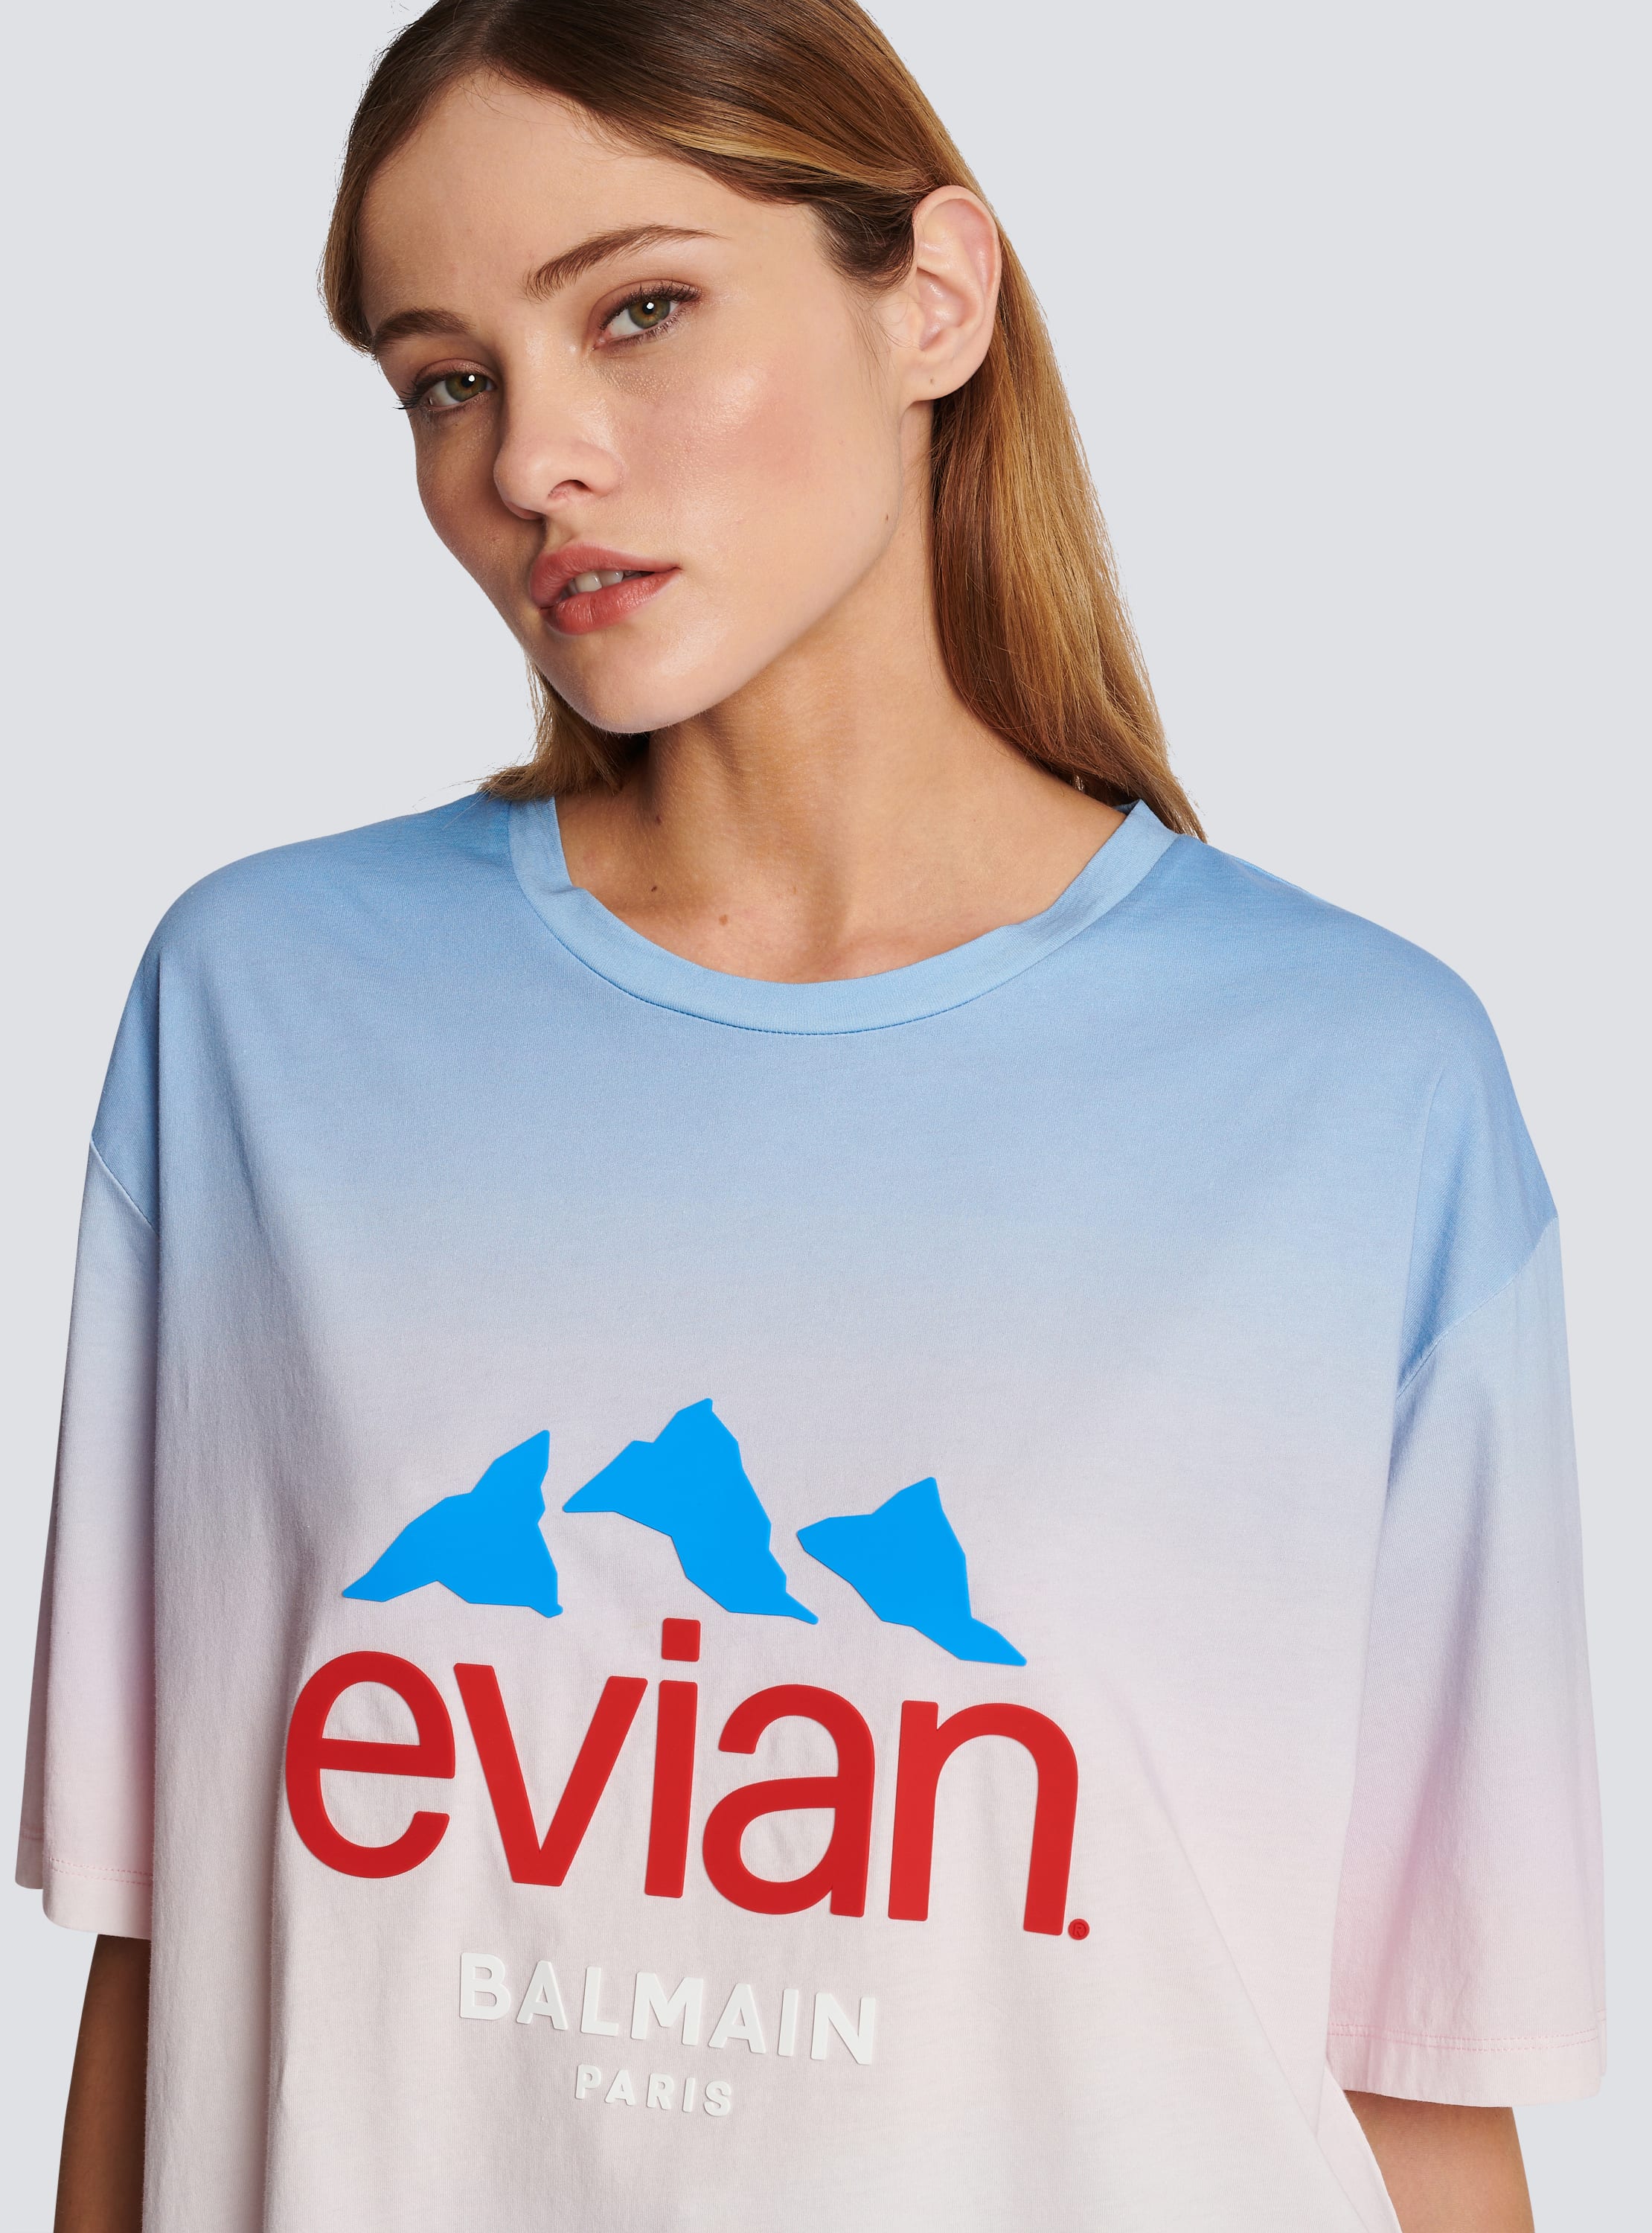 Balmain x Evian - グラデーション Tシャツ - Women | BALMAIN